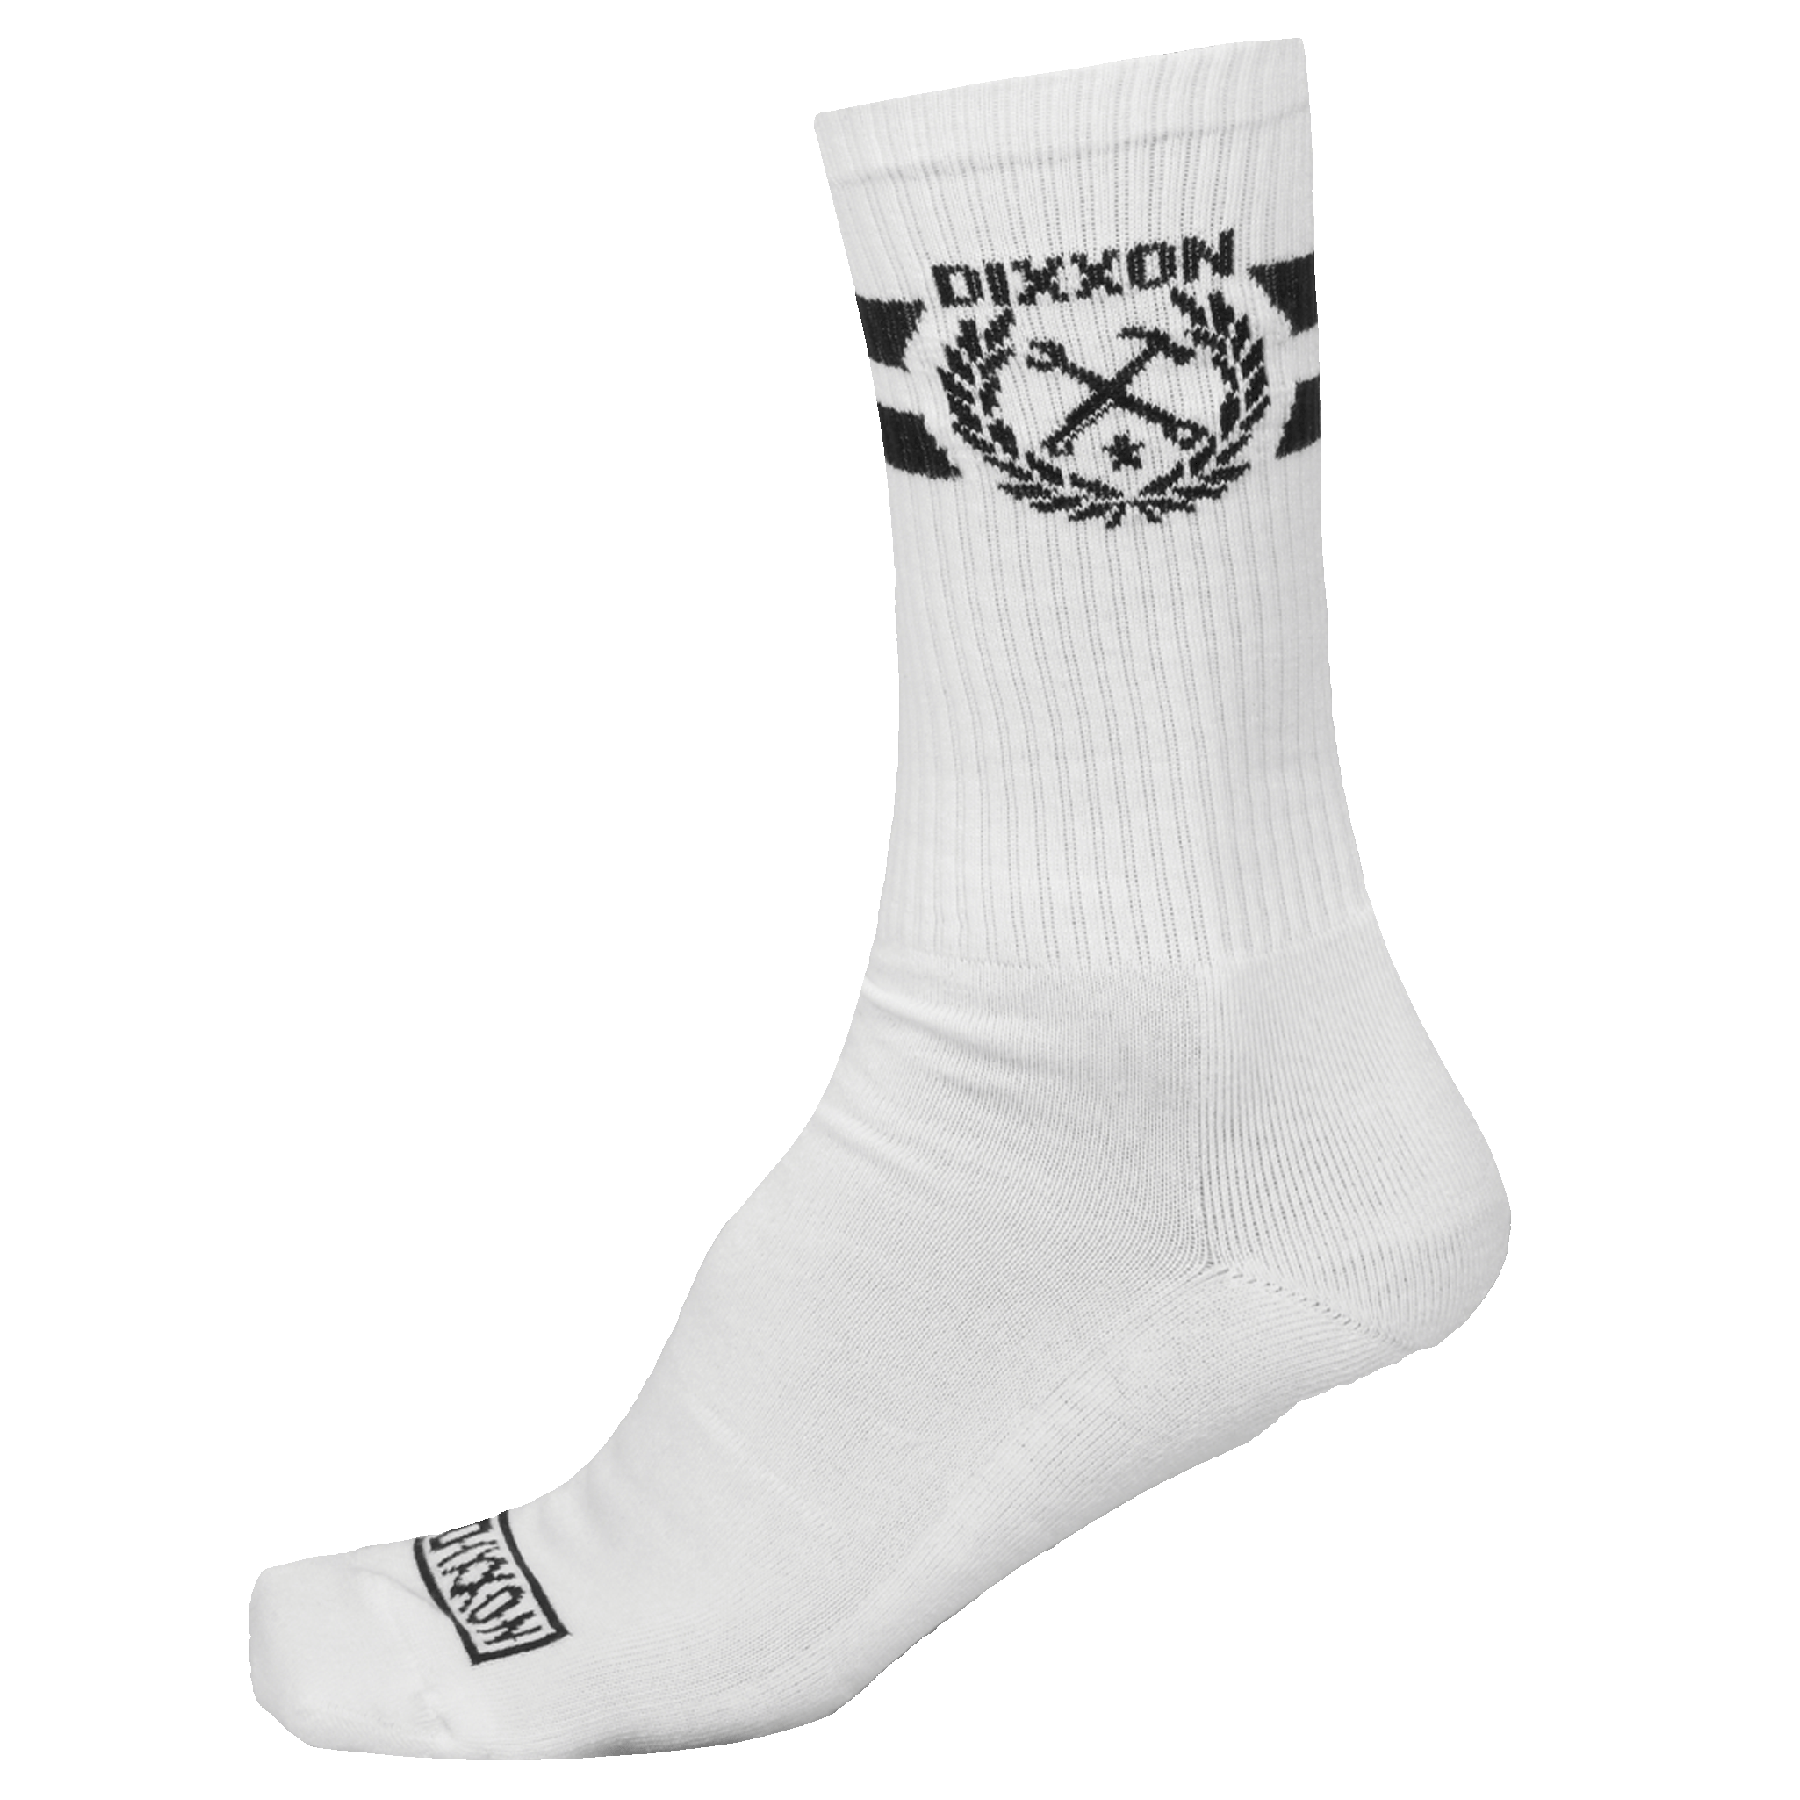 Dixxon Stay Humble Premium Crew Socks - White & Black